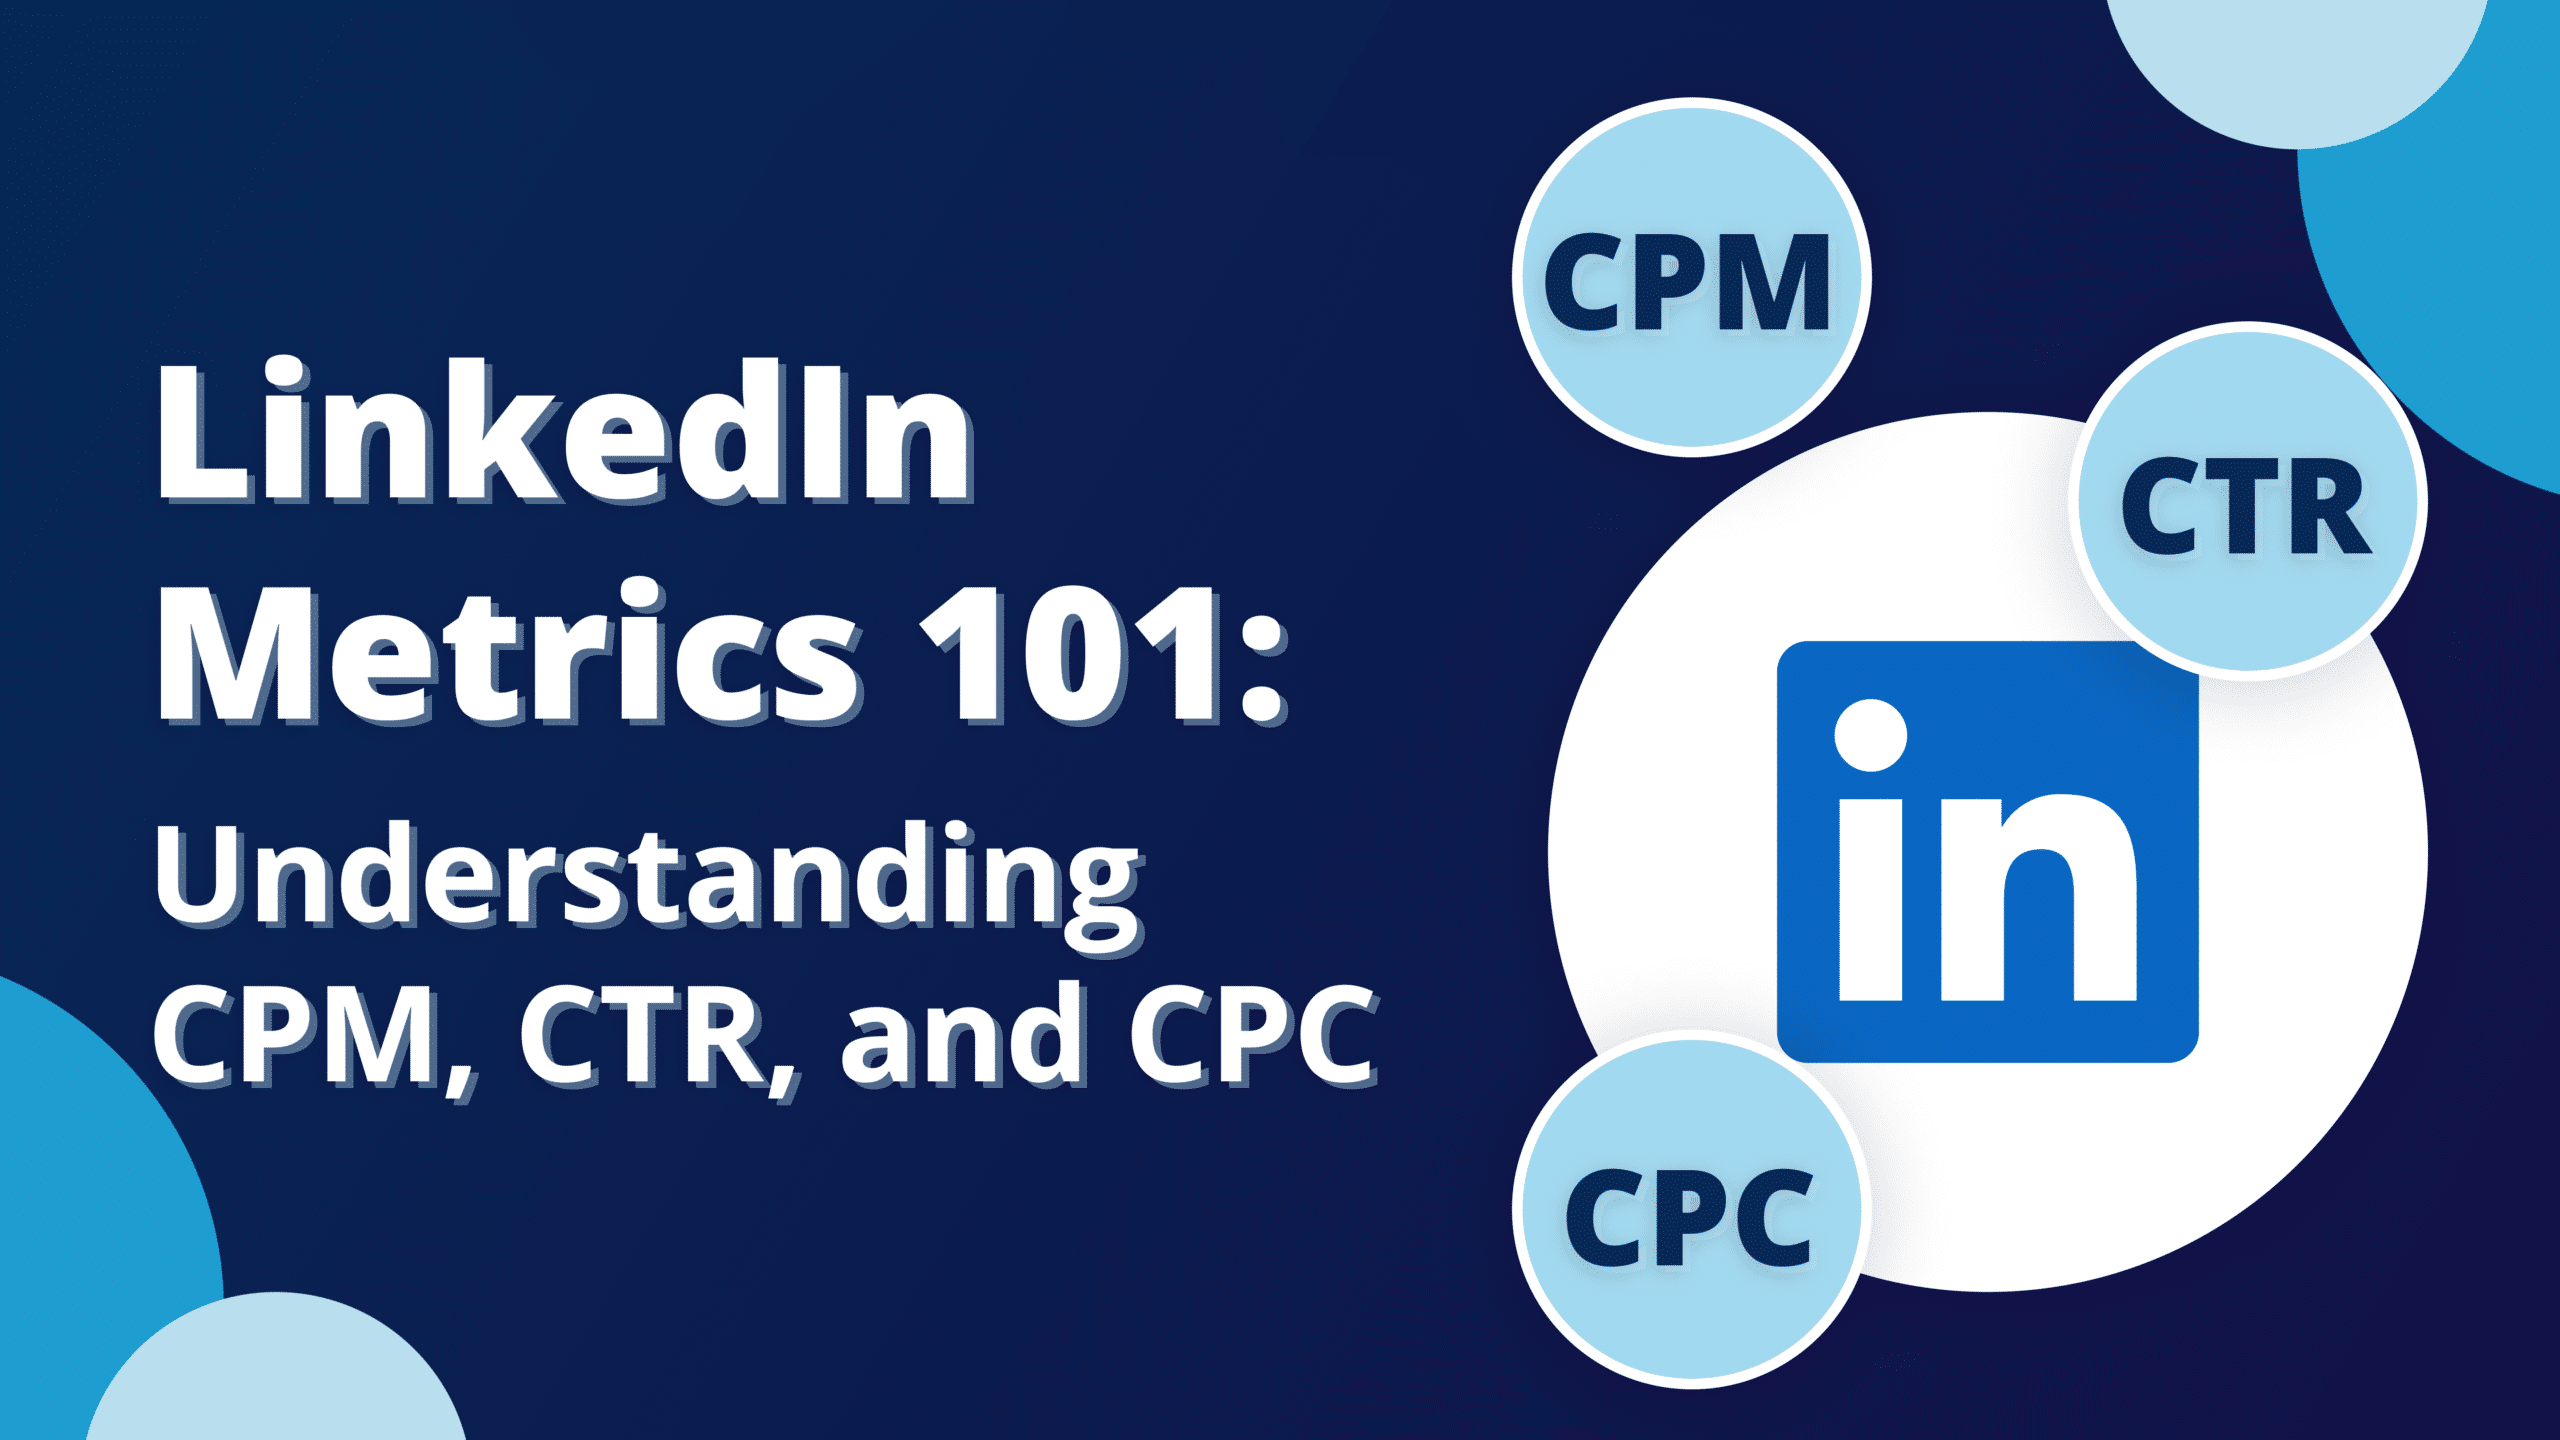 LinkedIn Metrics 101: Understanding CPM, CTR, and CPC